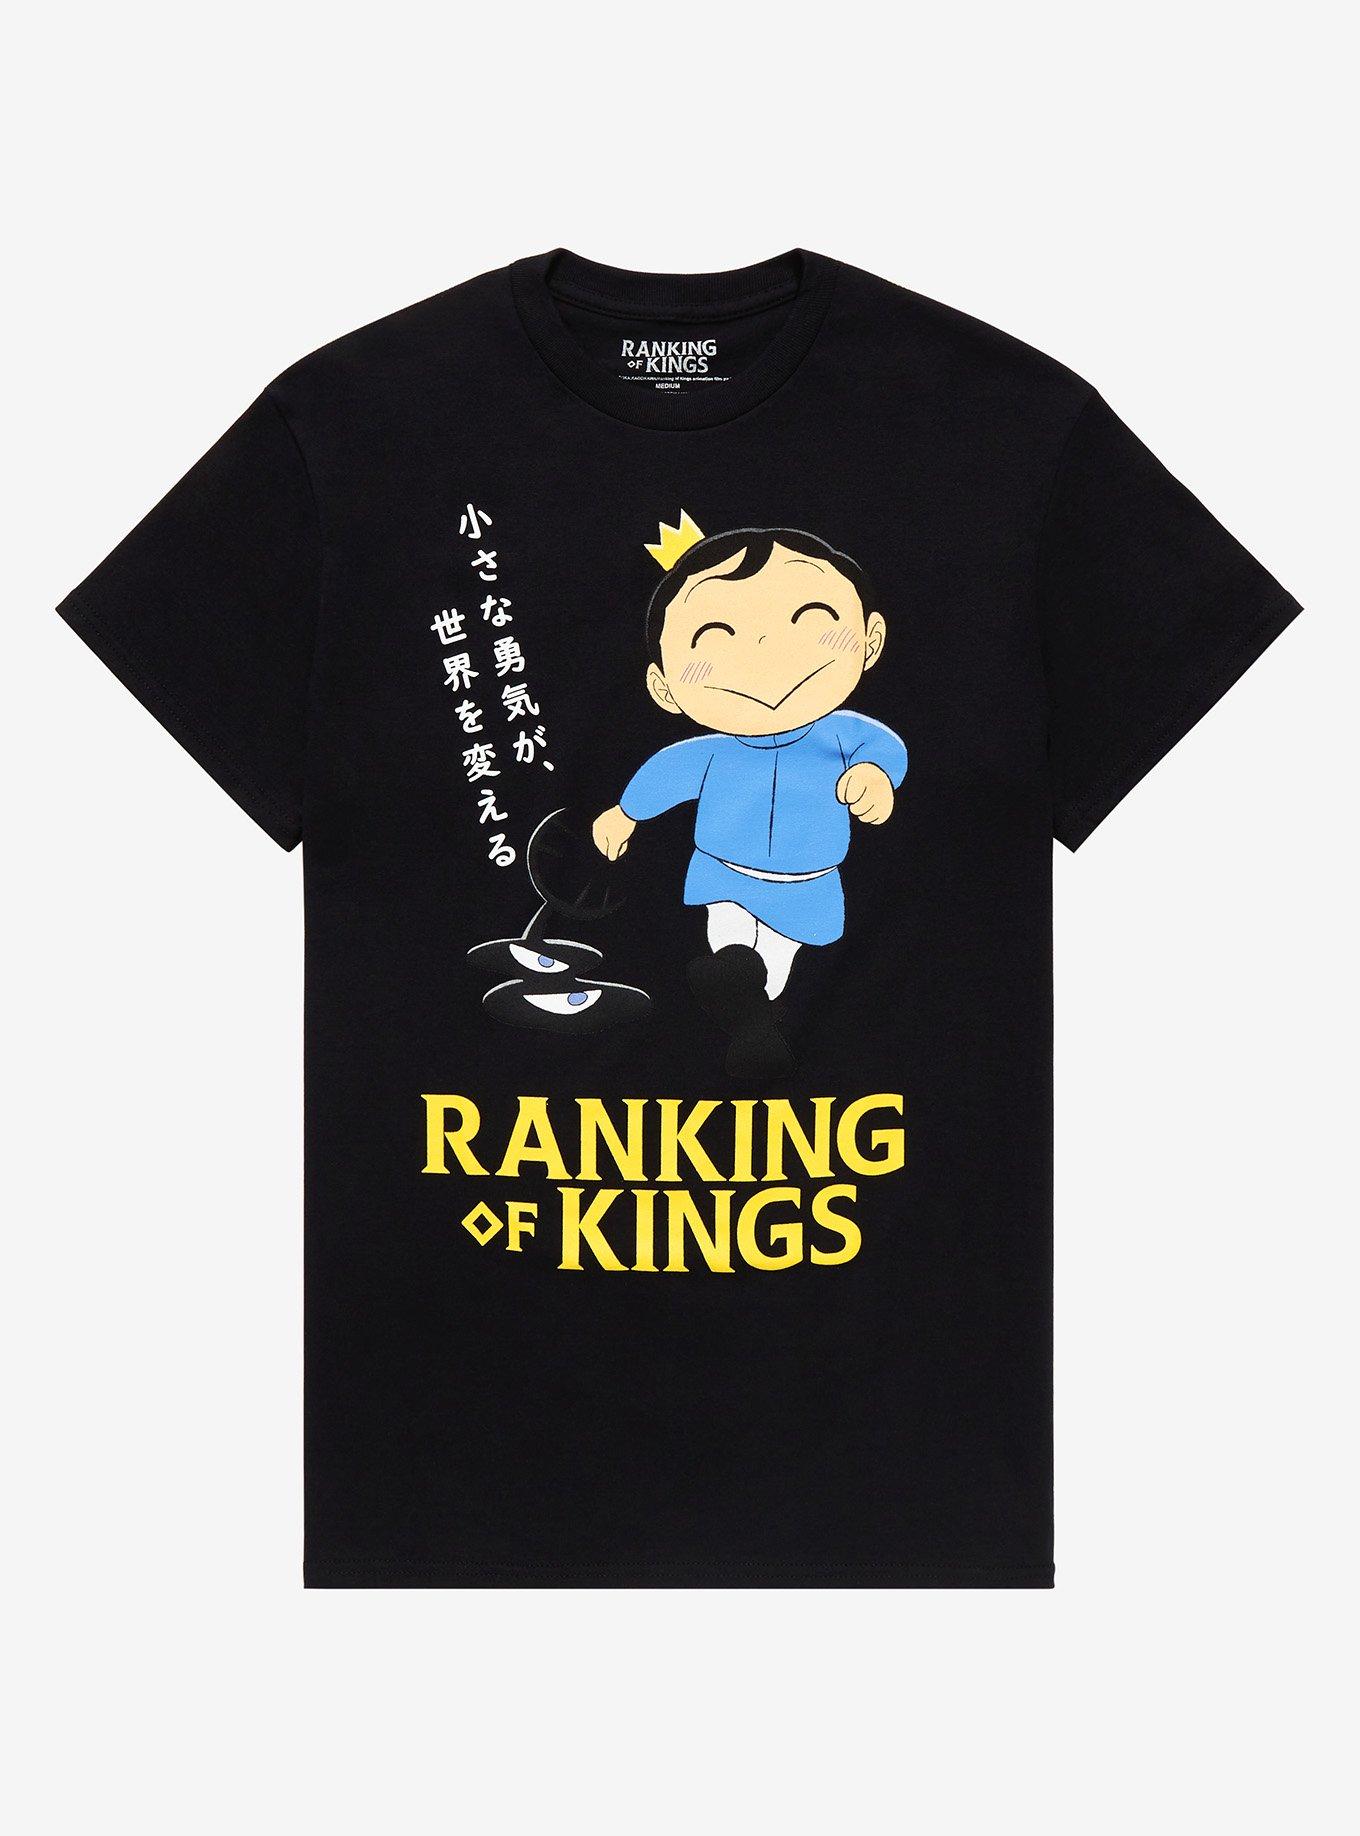 Boji (Ranking of Kings) vs The Prince (The Little Prince) : r